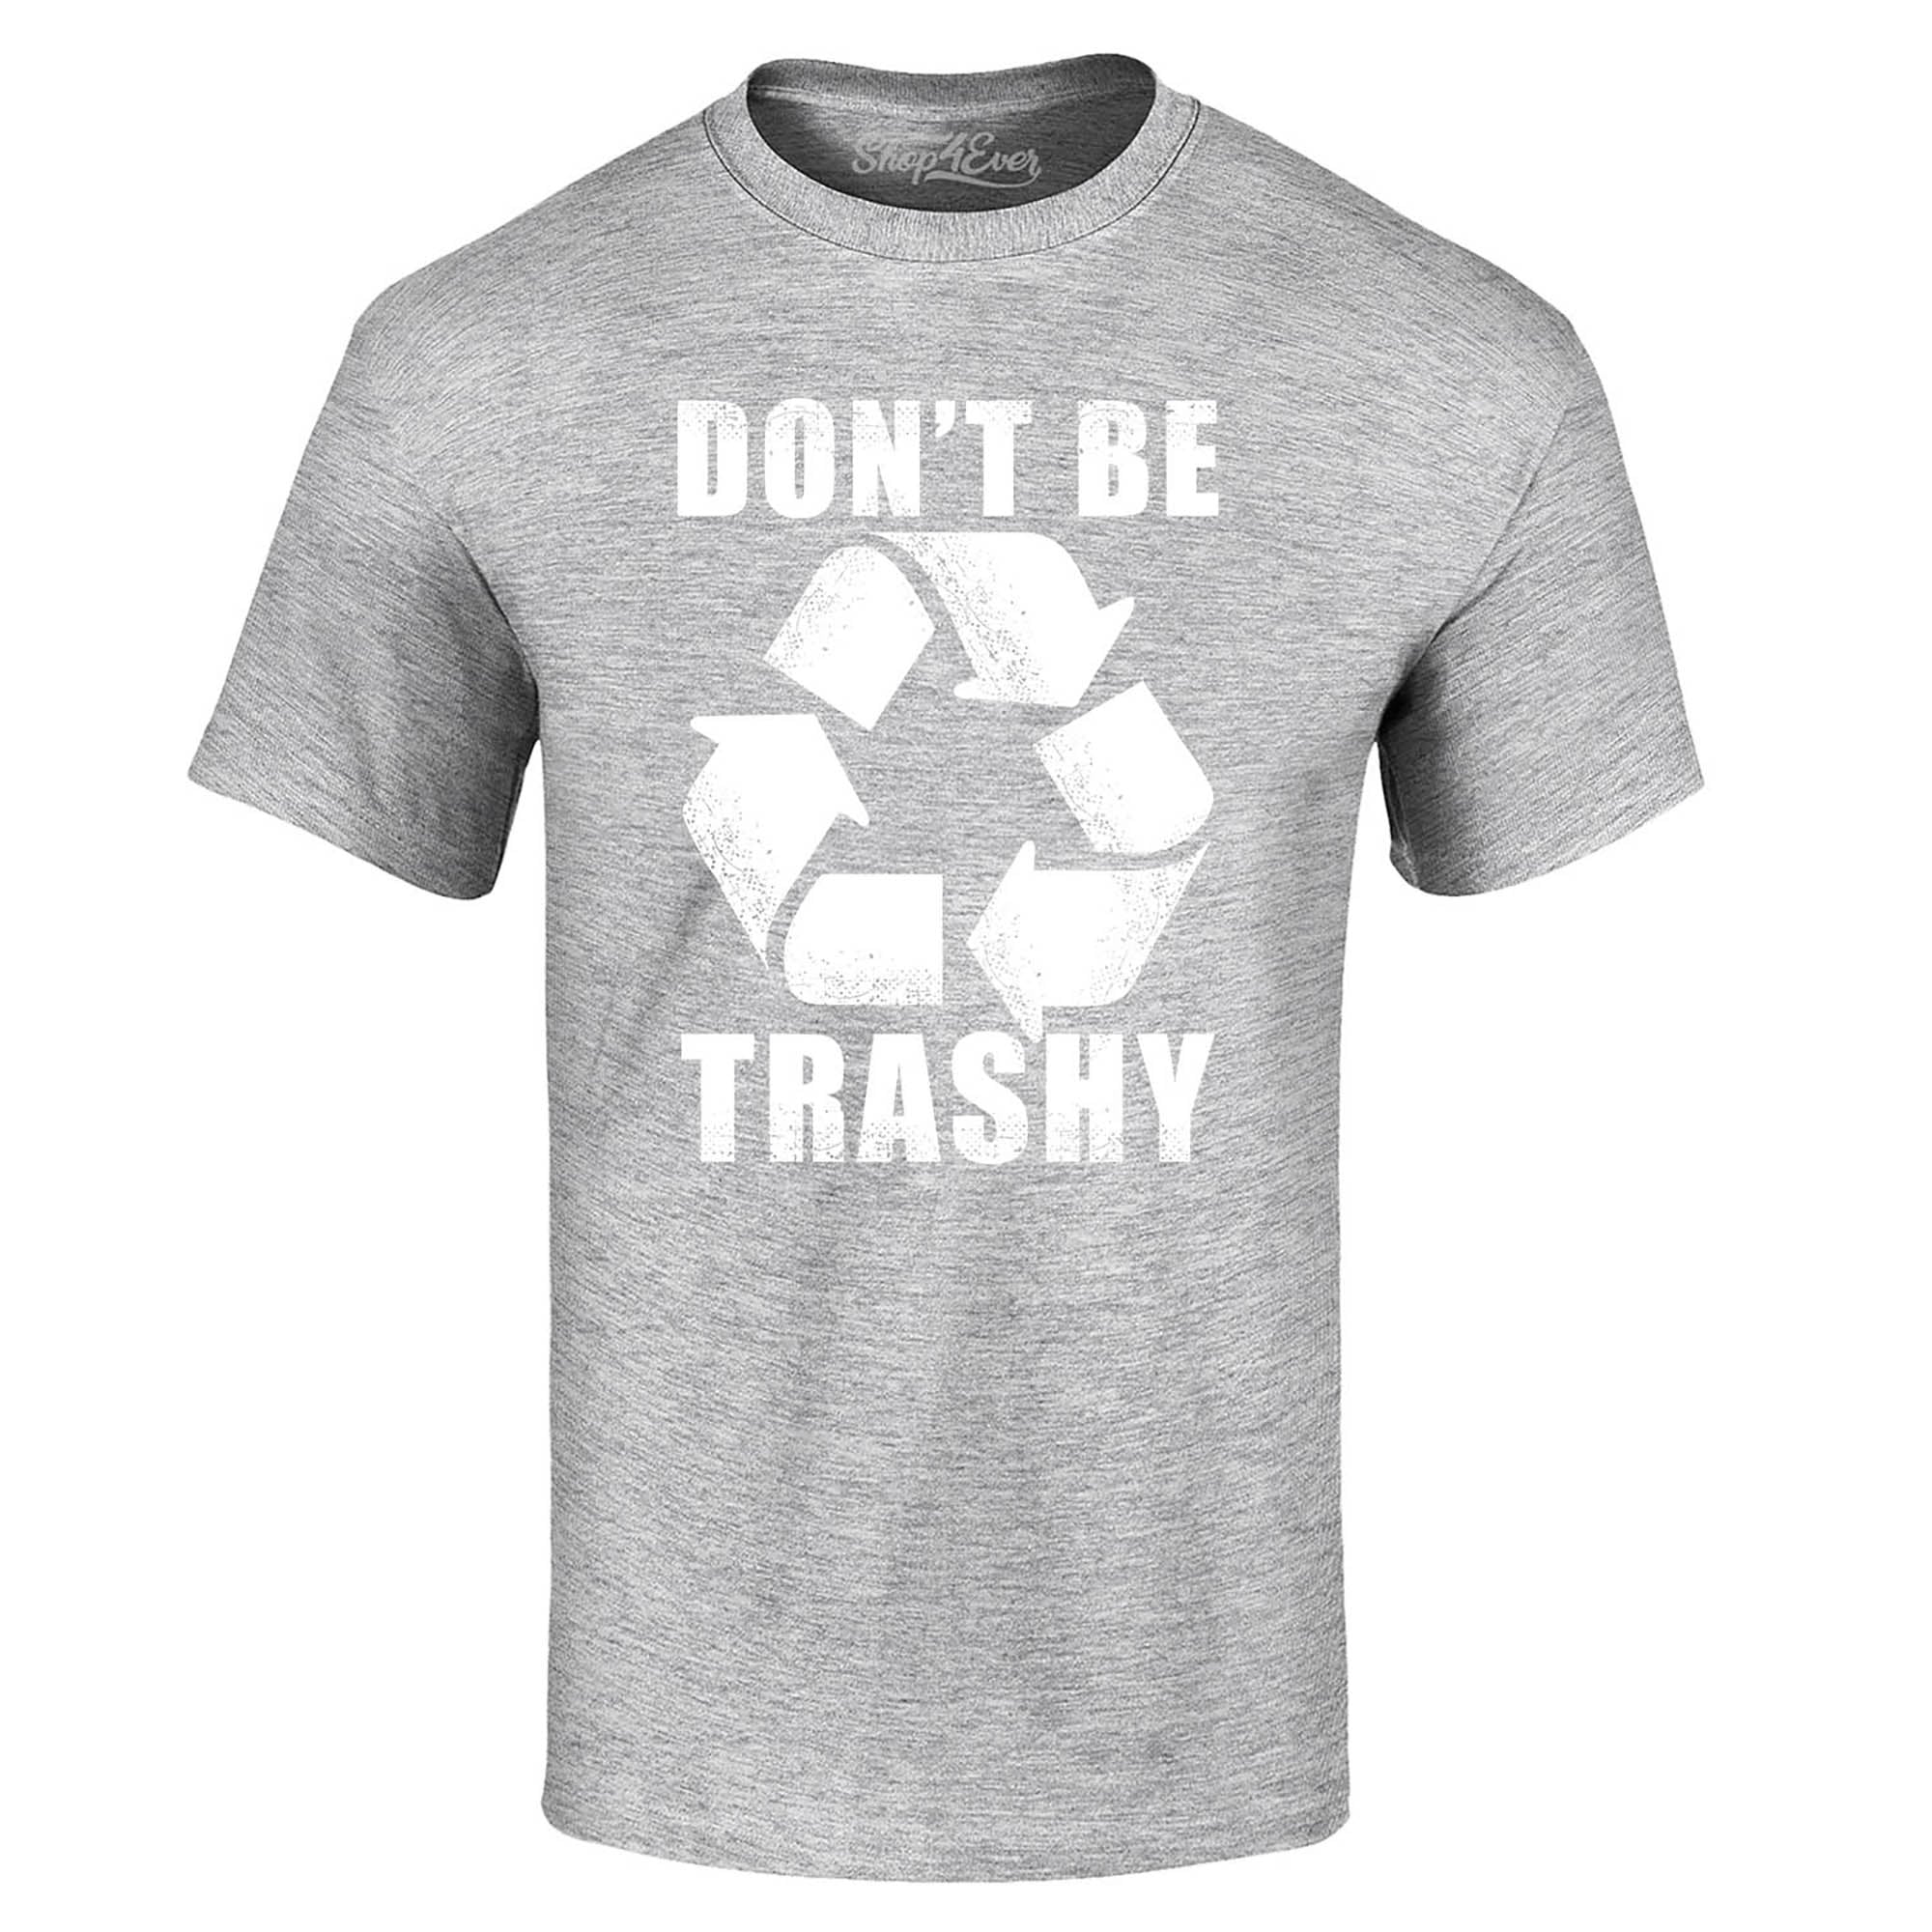 Don't Be Trashy Environmental T-Shirt